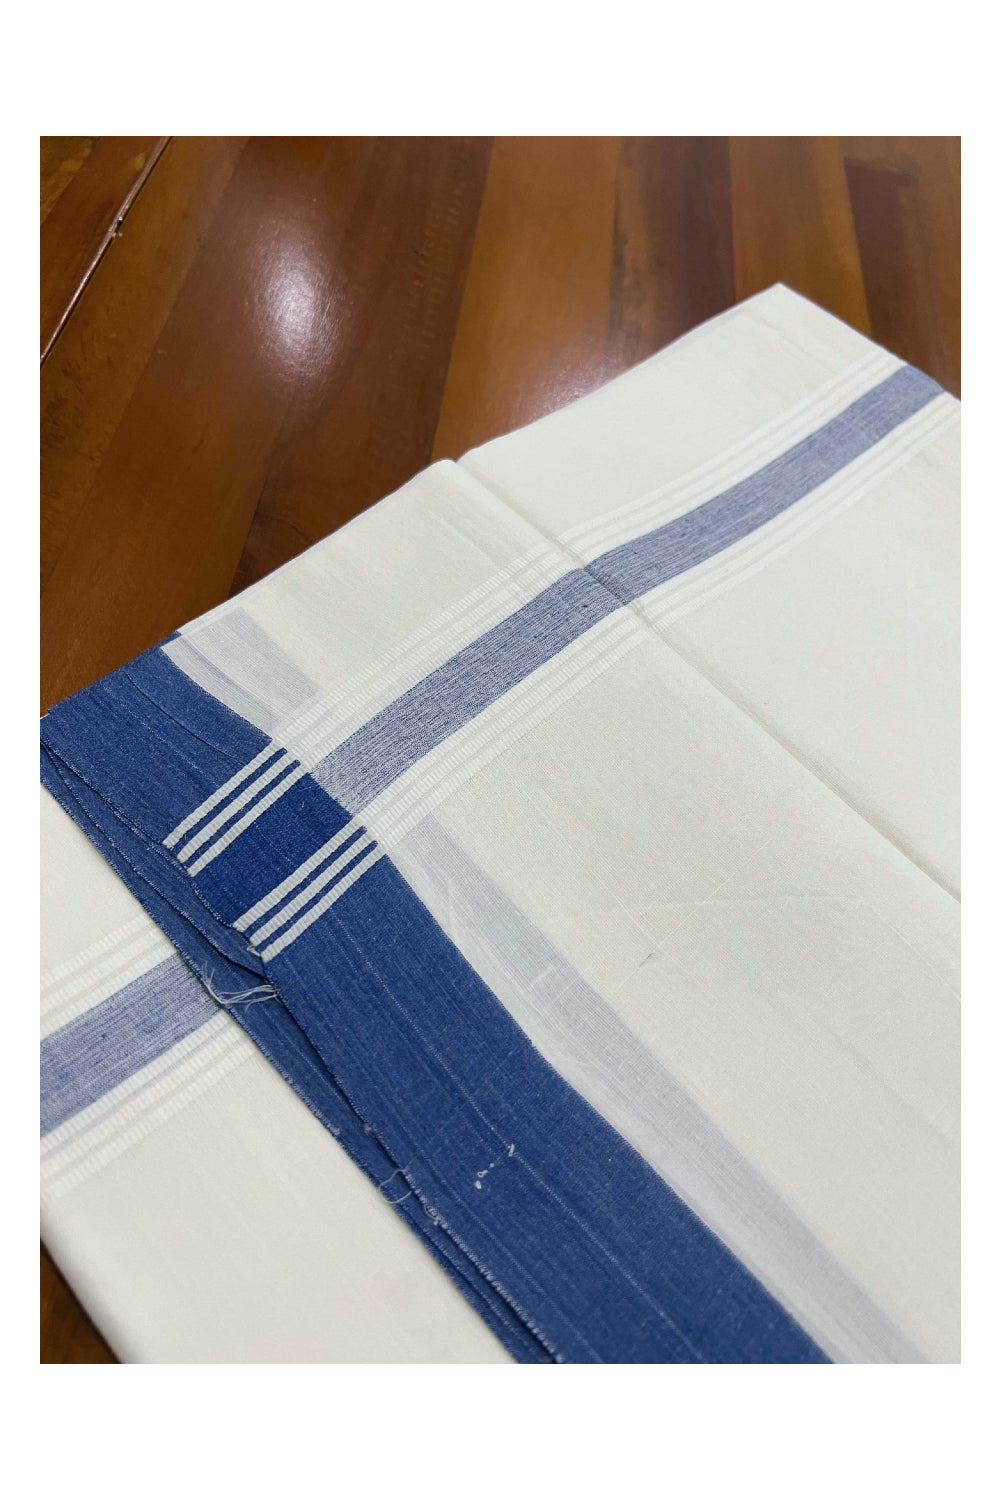 Pure White Cotton Mundu with Blue and White Kara (South Indian Dhoti)